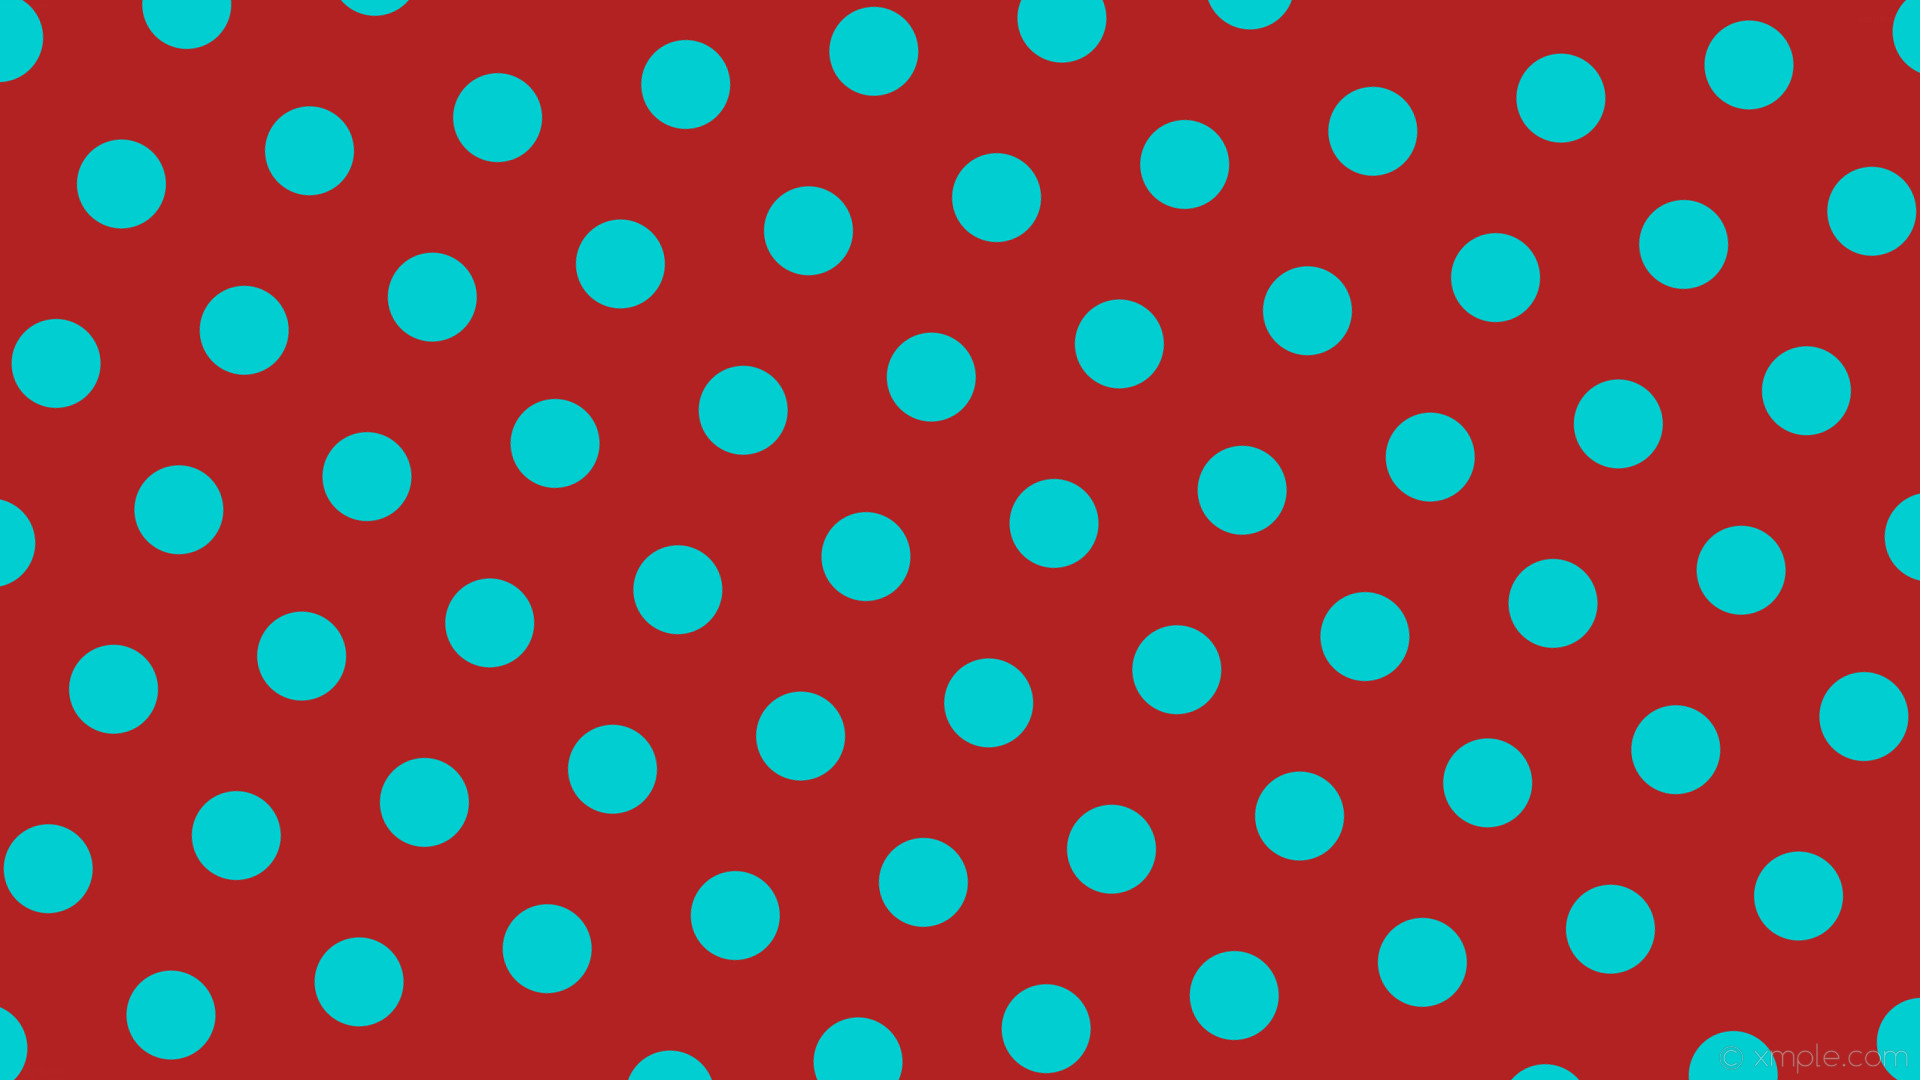 1920x1080 wallpaper red polka dots hexagon blue fire brick dark turquoise #b22222  #00ced1 diagonal 10